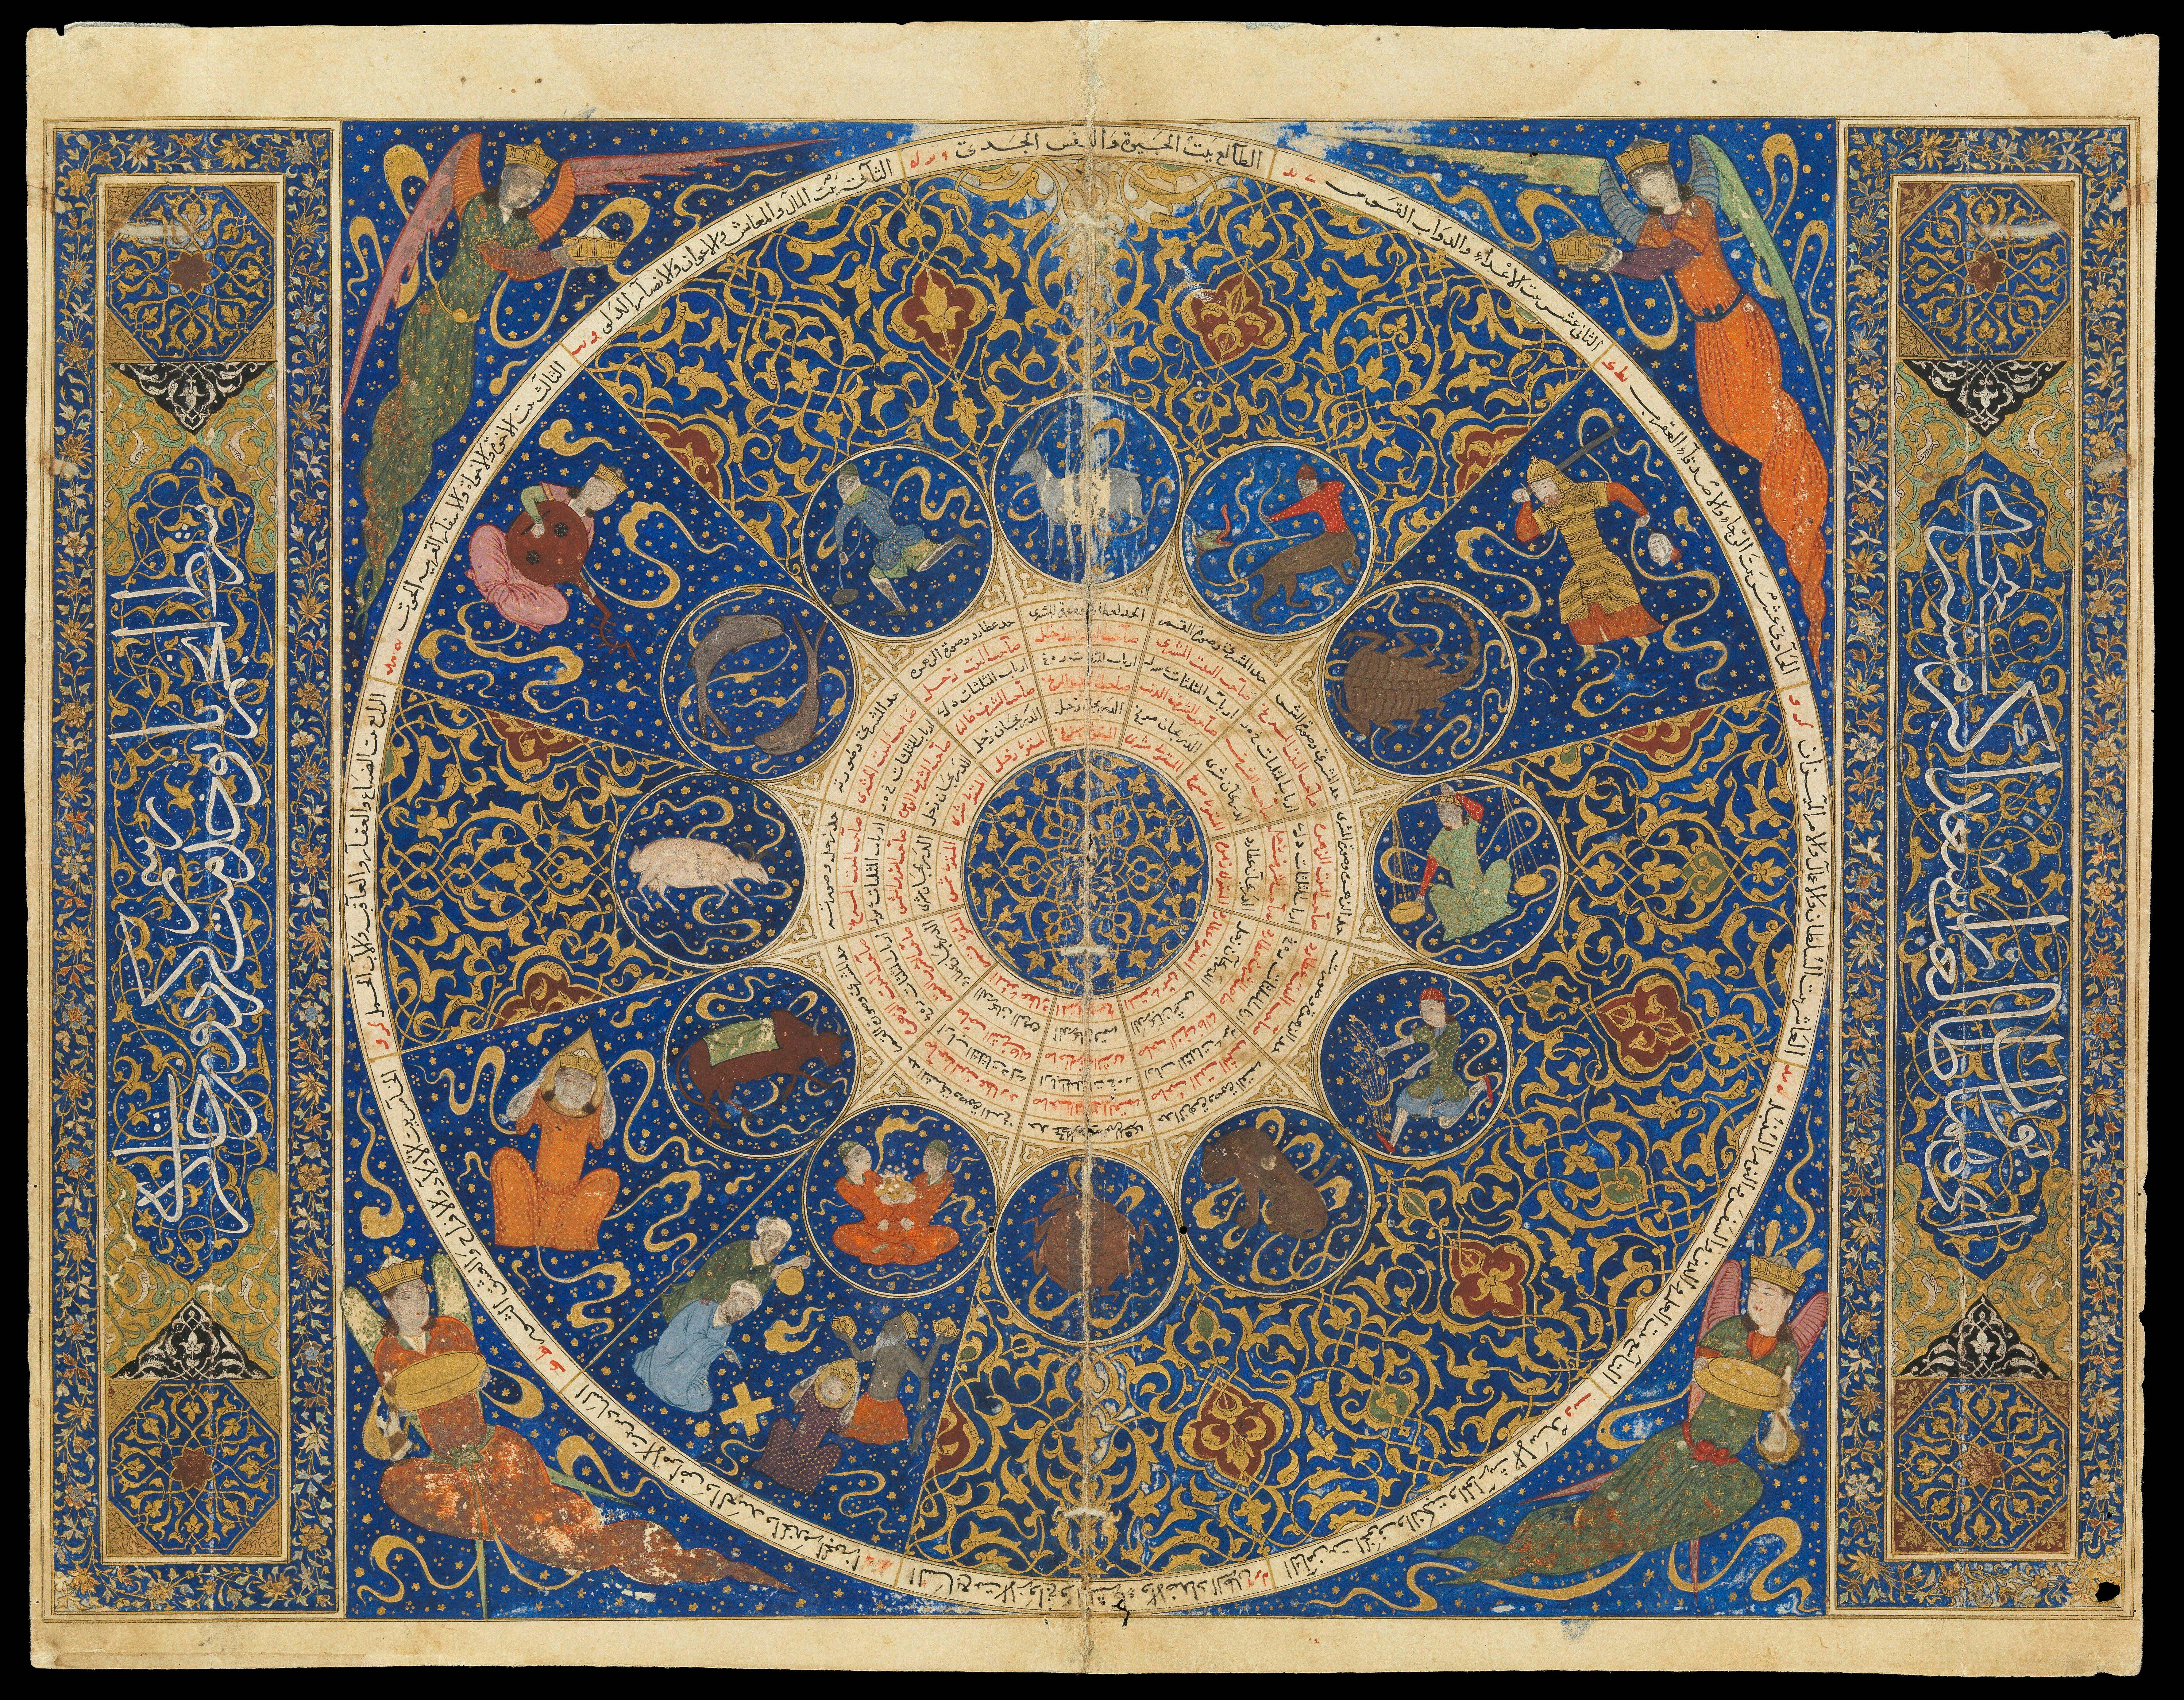 An illuminated manuscript of the cosmos.